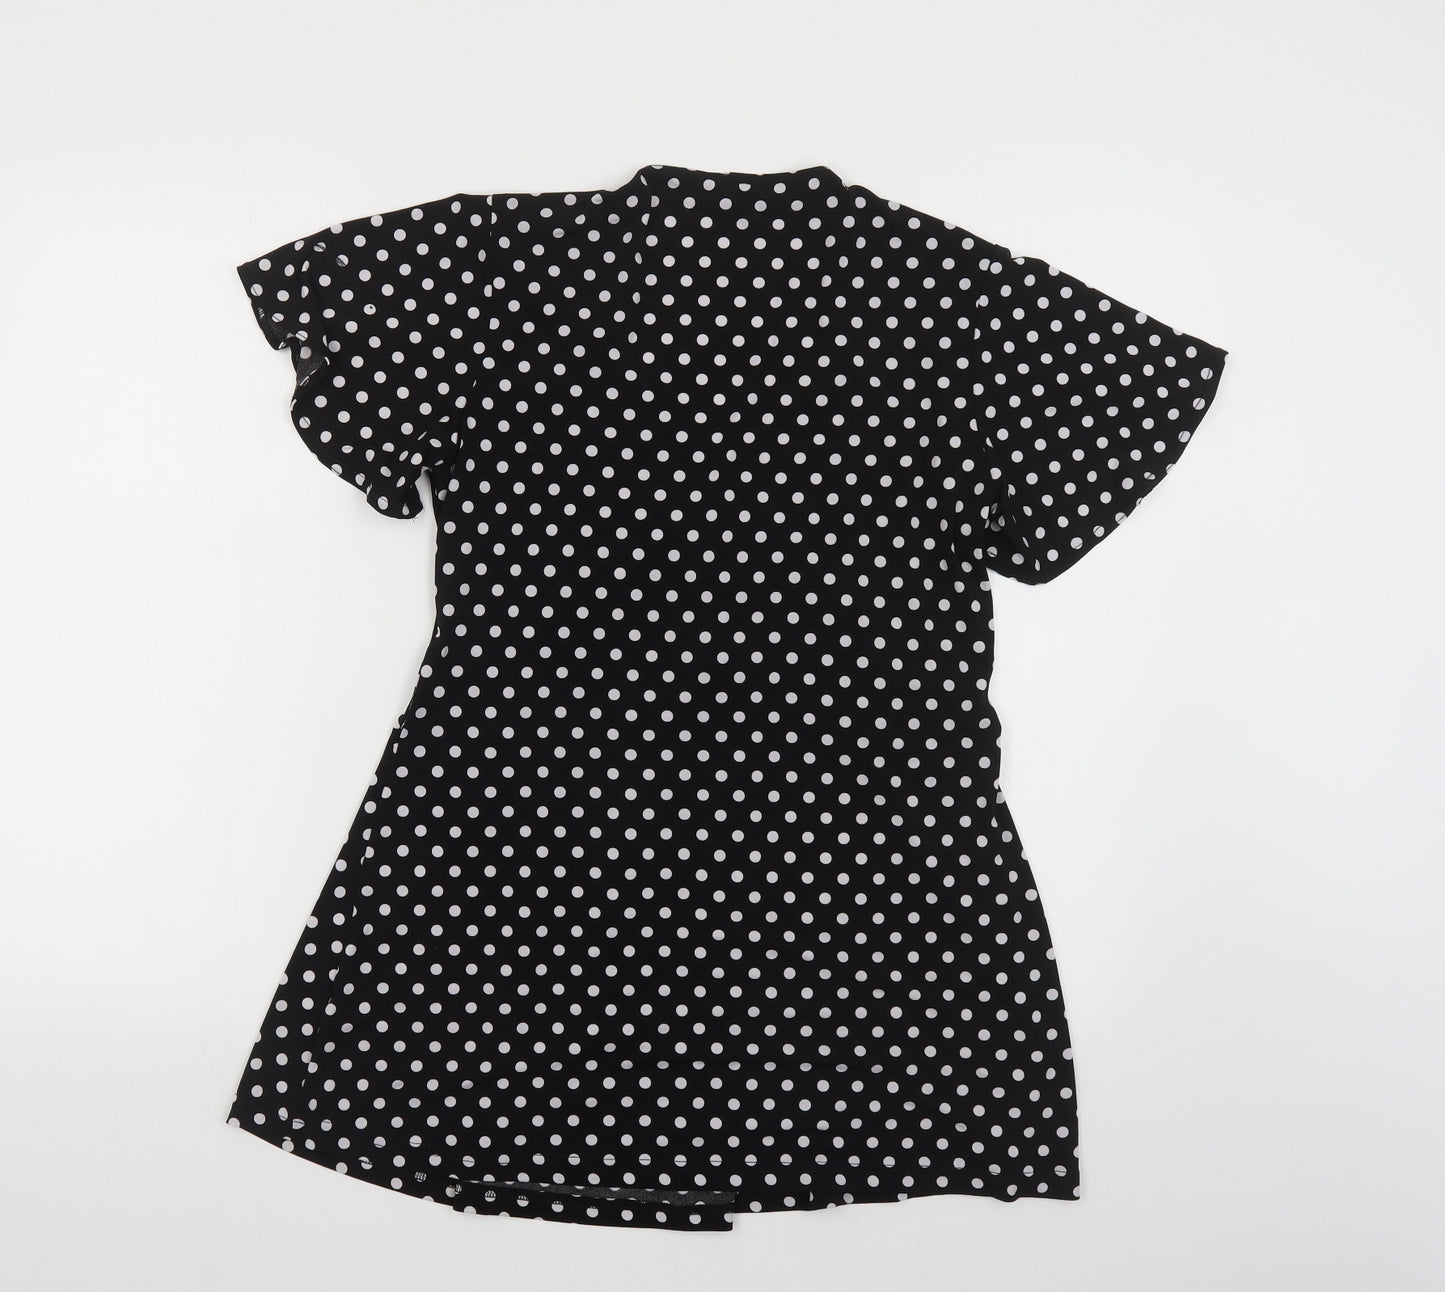 Joanna Hope Womens Black Polka Dot Polyester Basic Blouse Size 14 V-Neck - Lace Detail